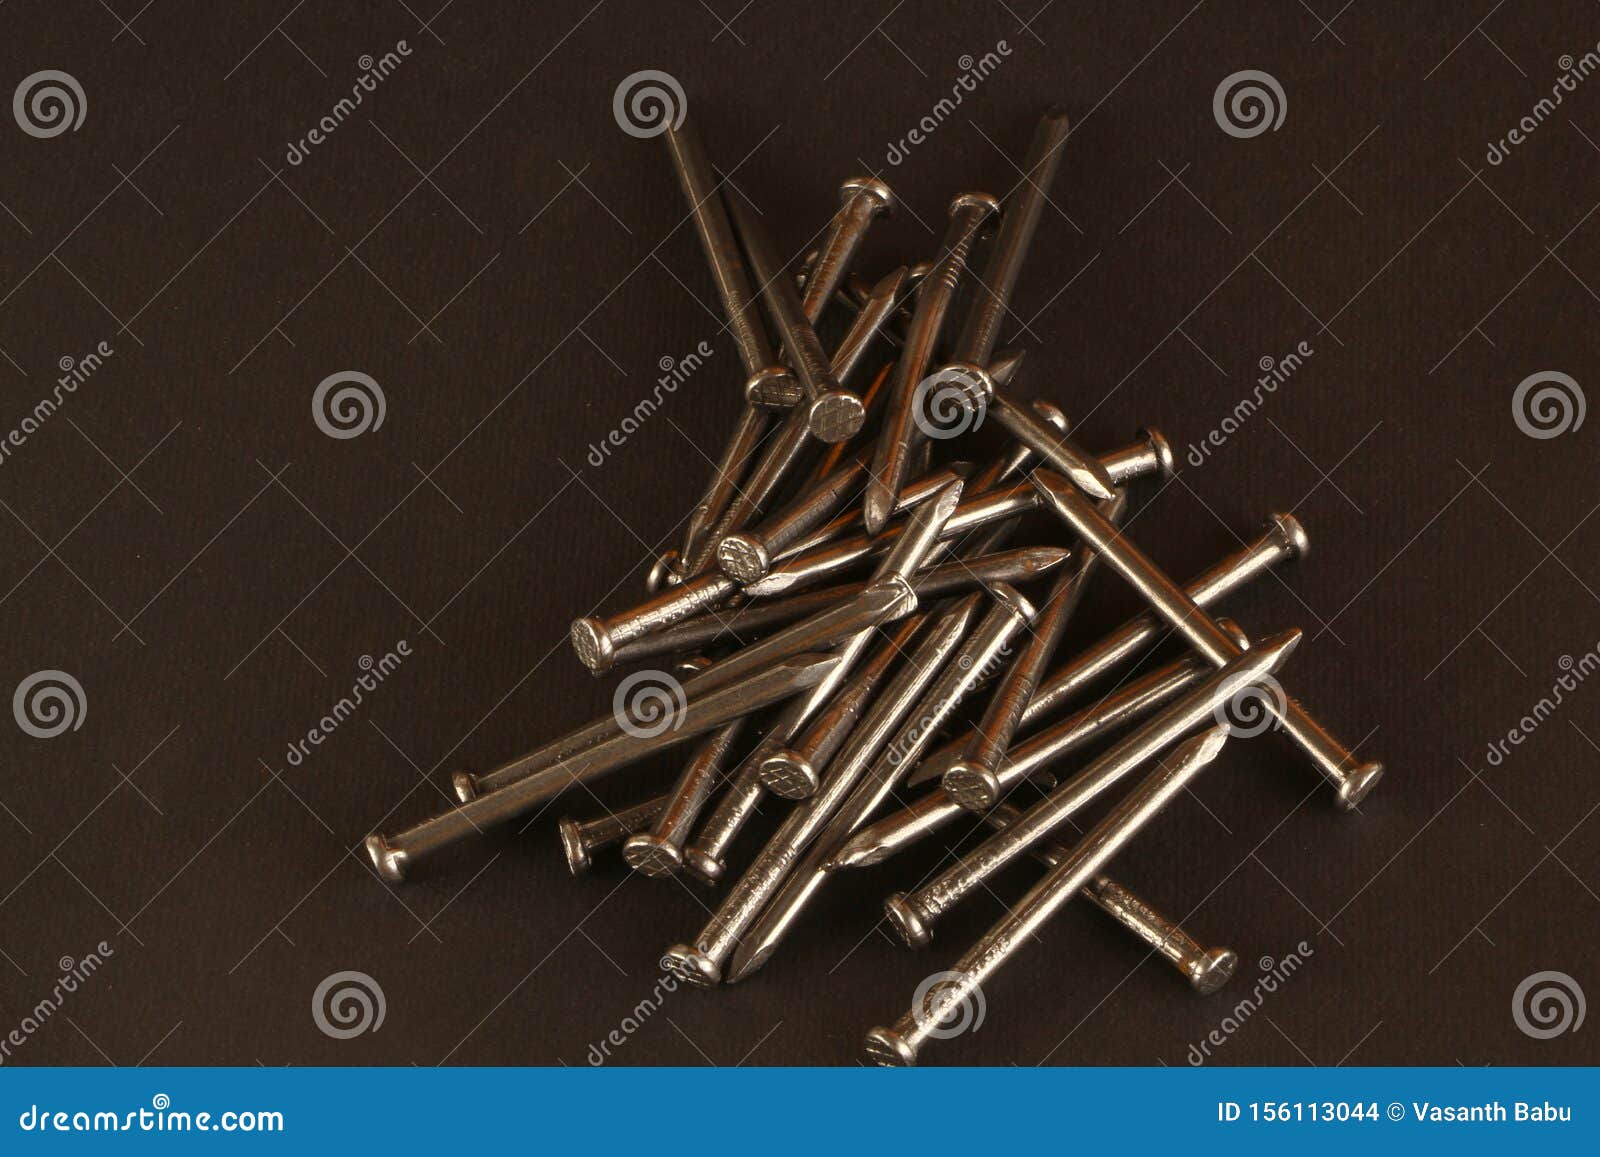 Metallic Iron Nails in Black Background Stock Photo - Image of ...